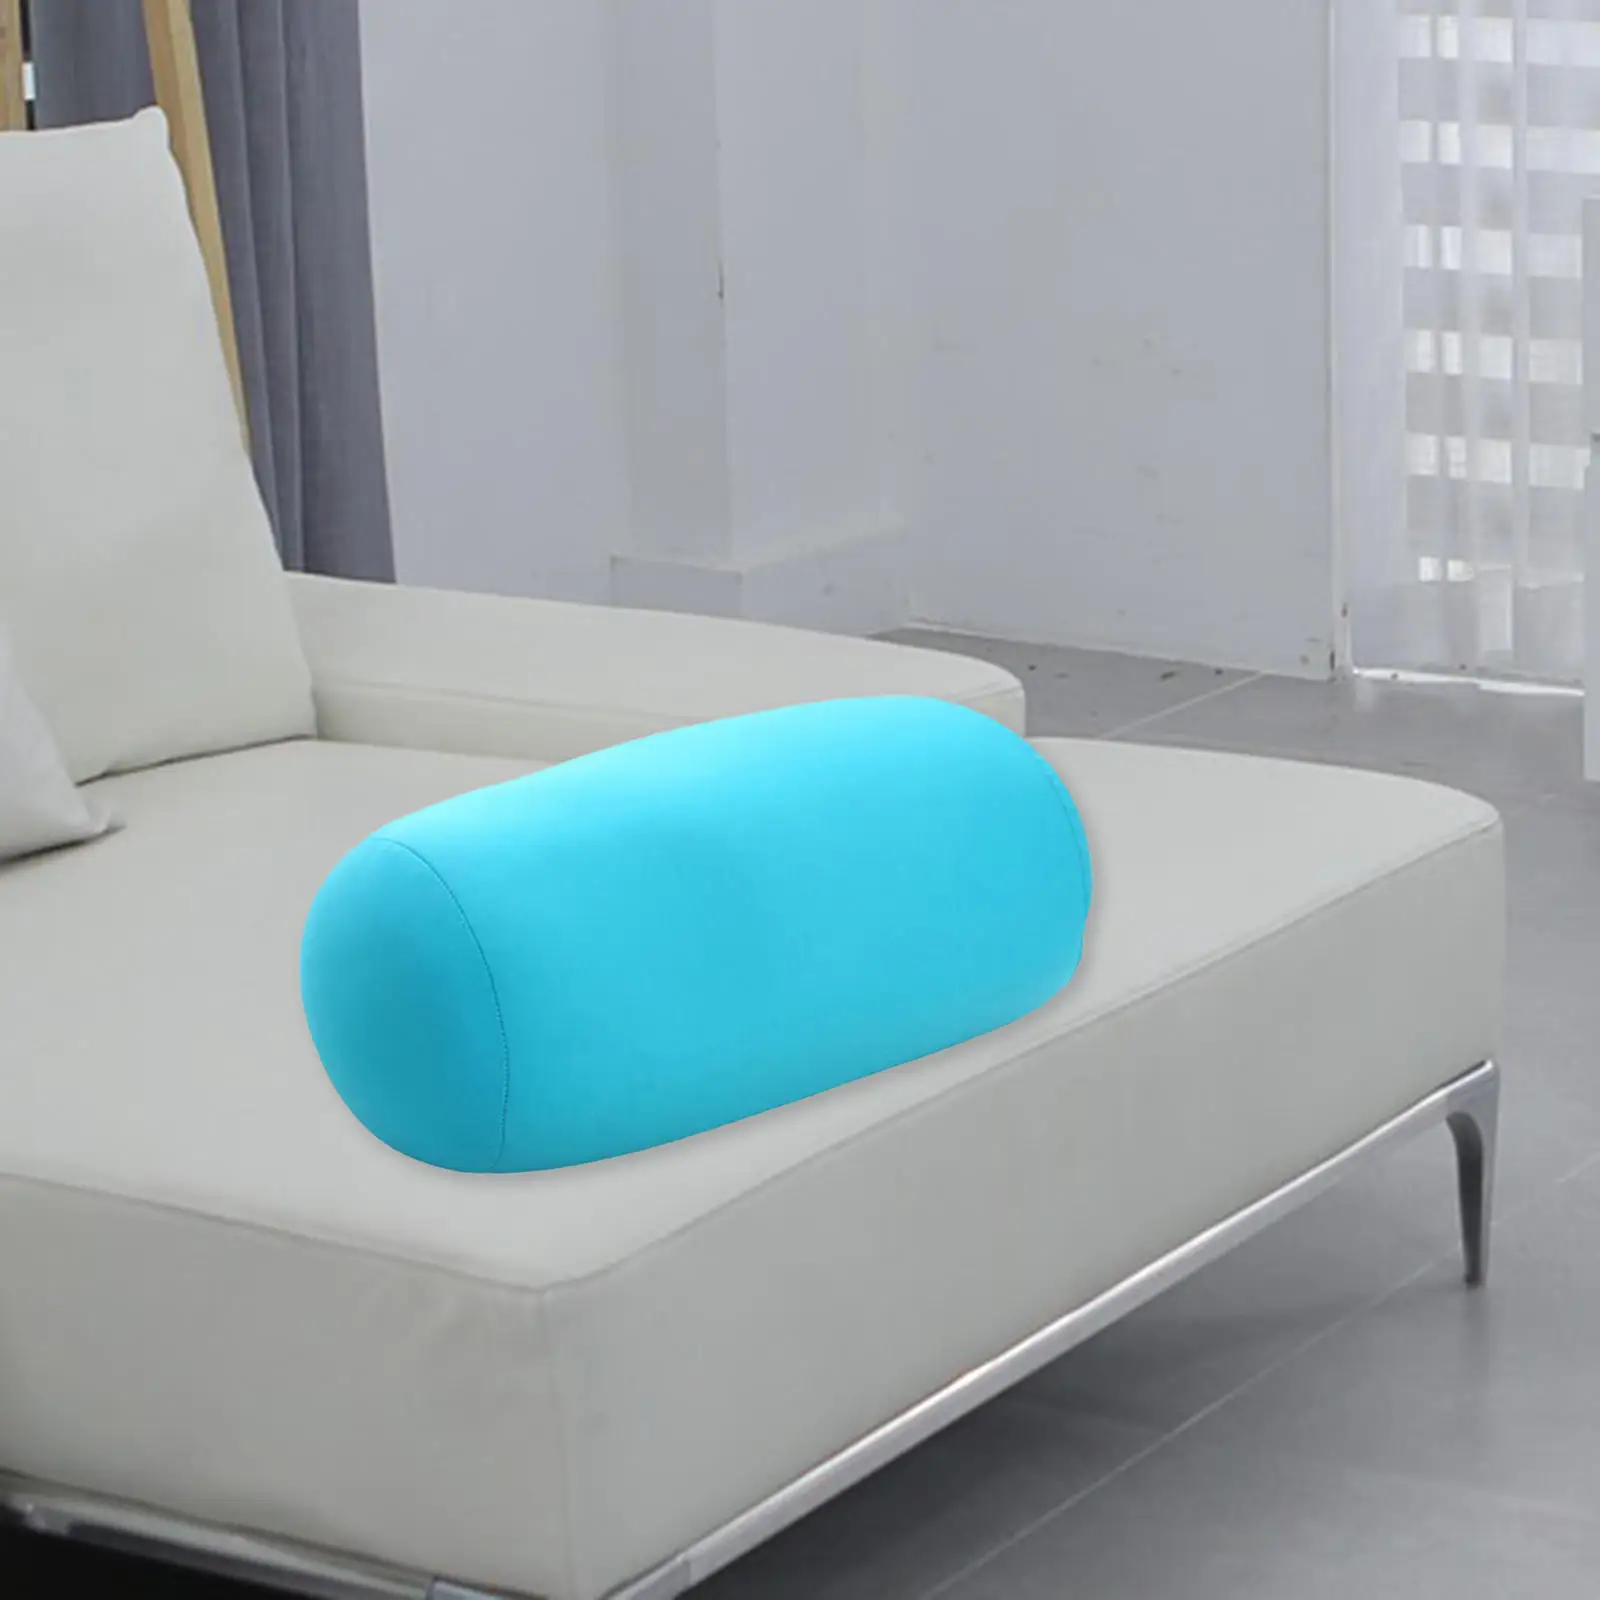 Soft Sleeping Bolster Pillow, Cylindrical Body Support Waist Neck Cushion, Yoga Massage Headrest for Travel Home Office